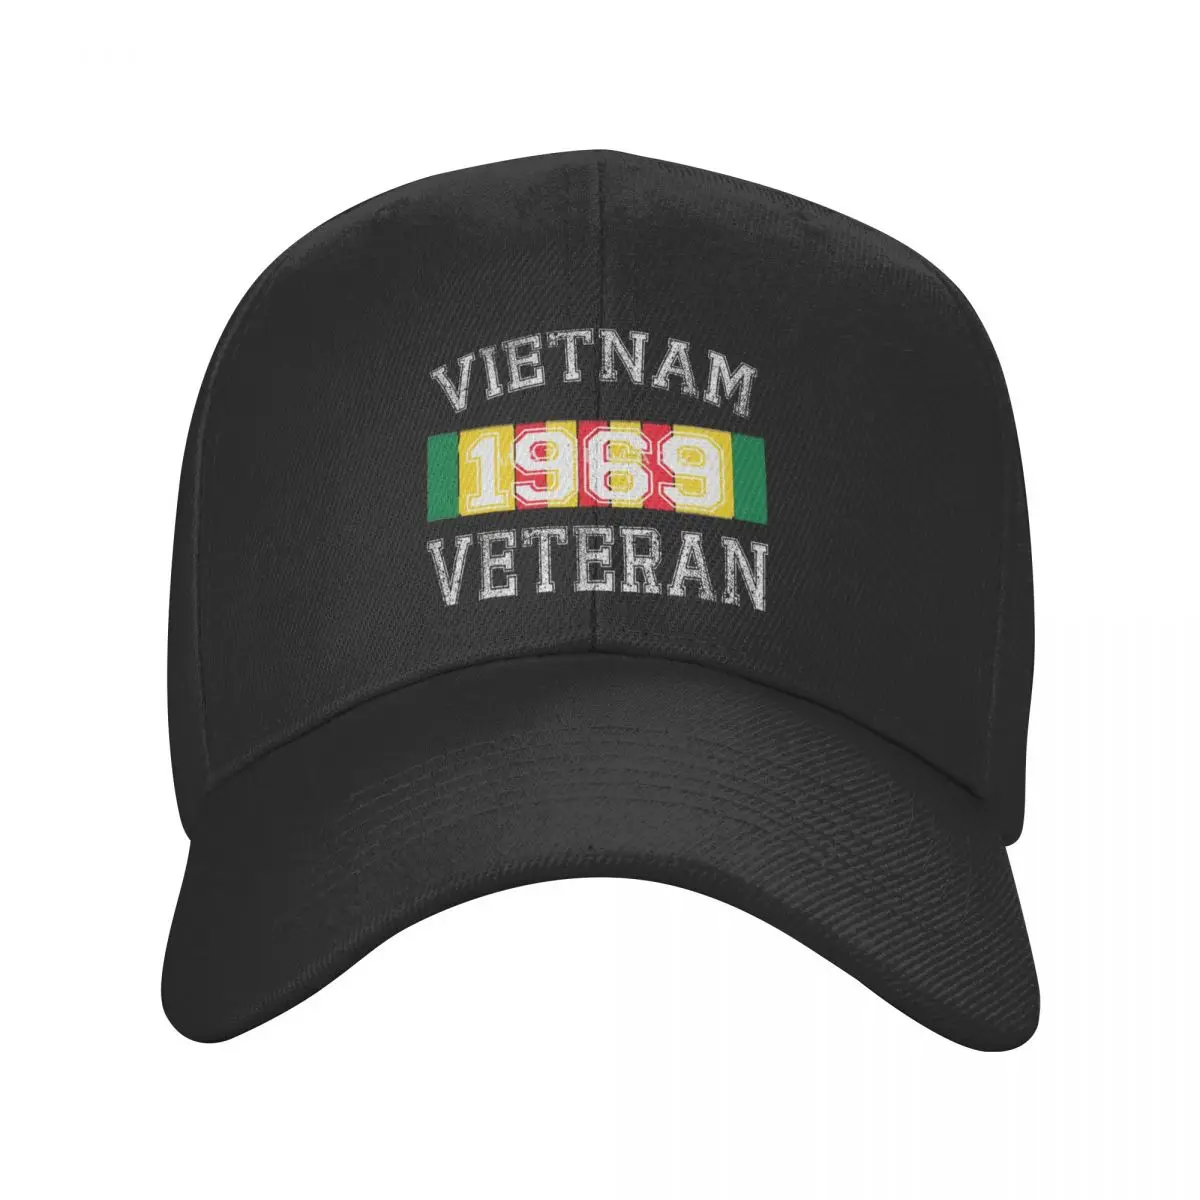 

Vietnam Veteran 1969 Casquette, Polyester Cap Customizable Practical Sports Nice Gift